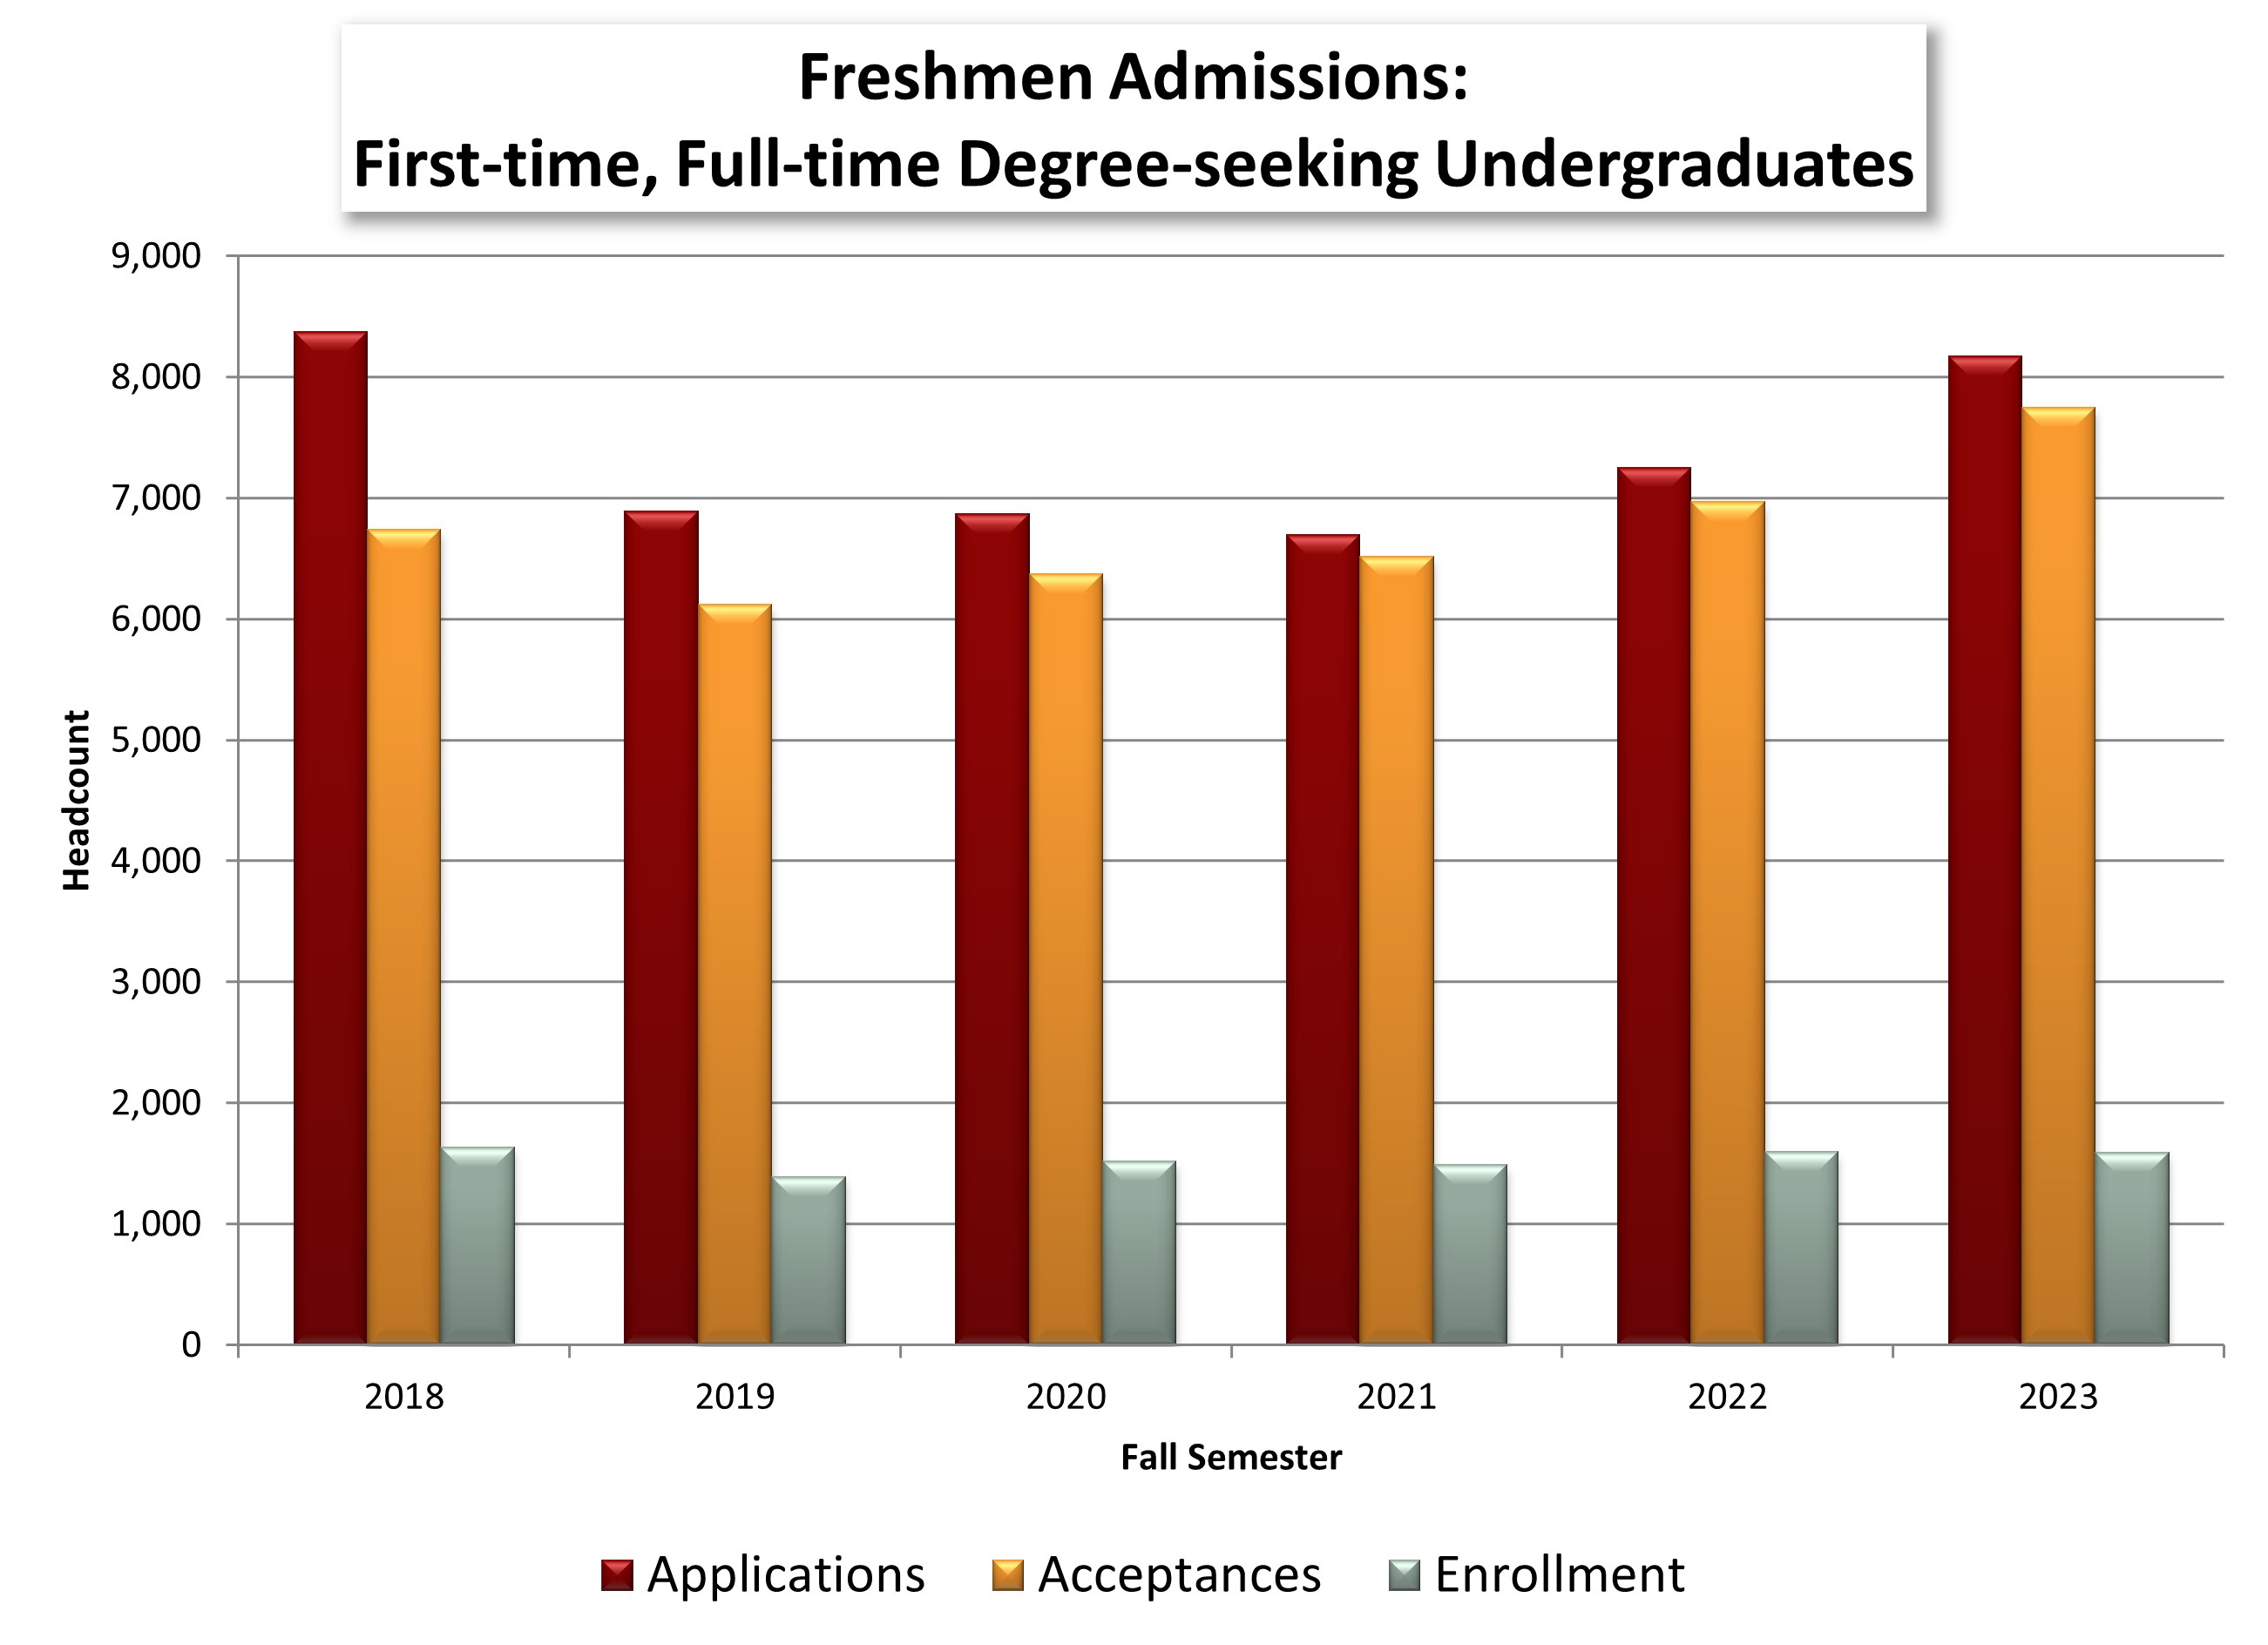 Freshmen Admissions: First-time, Full-time Degree-seeking Undergraduates